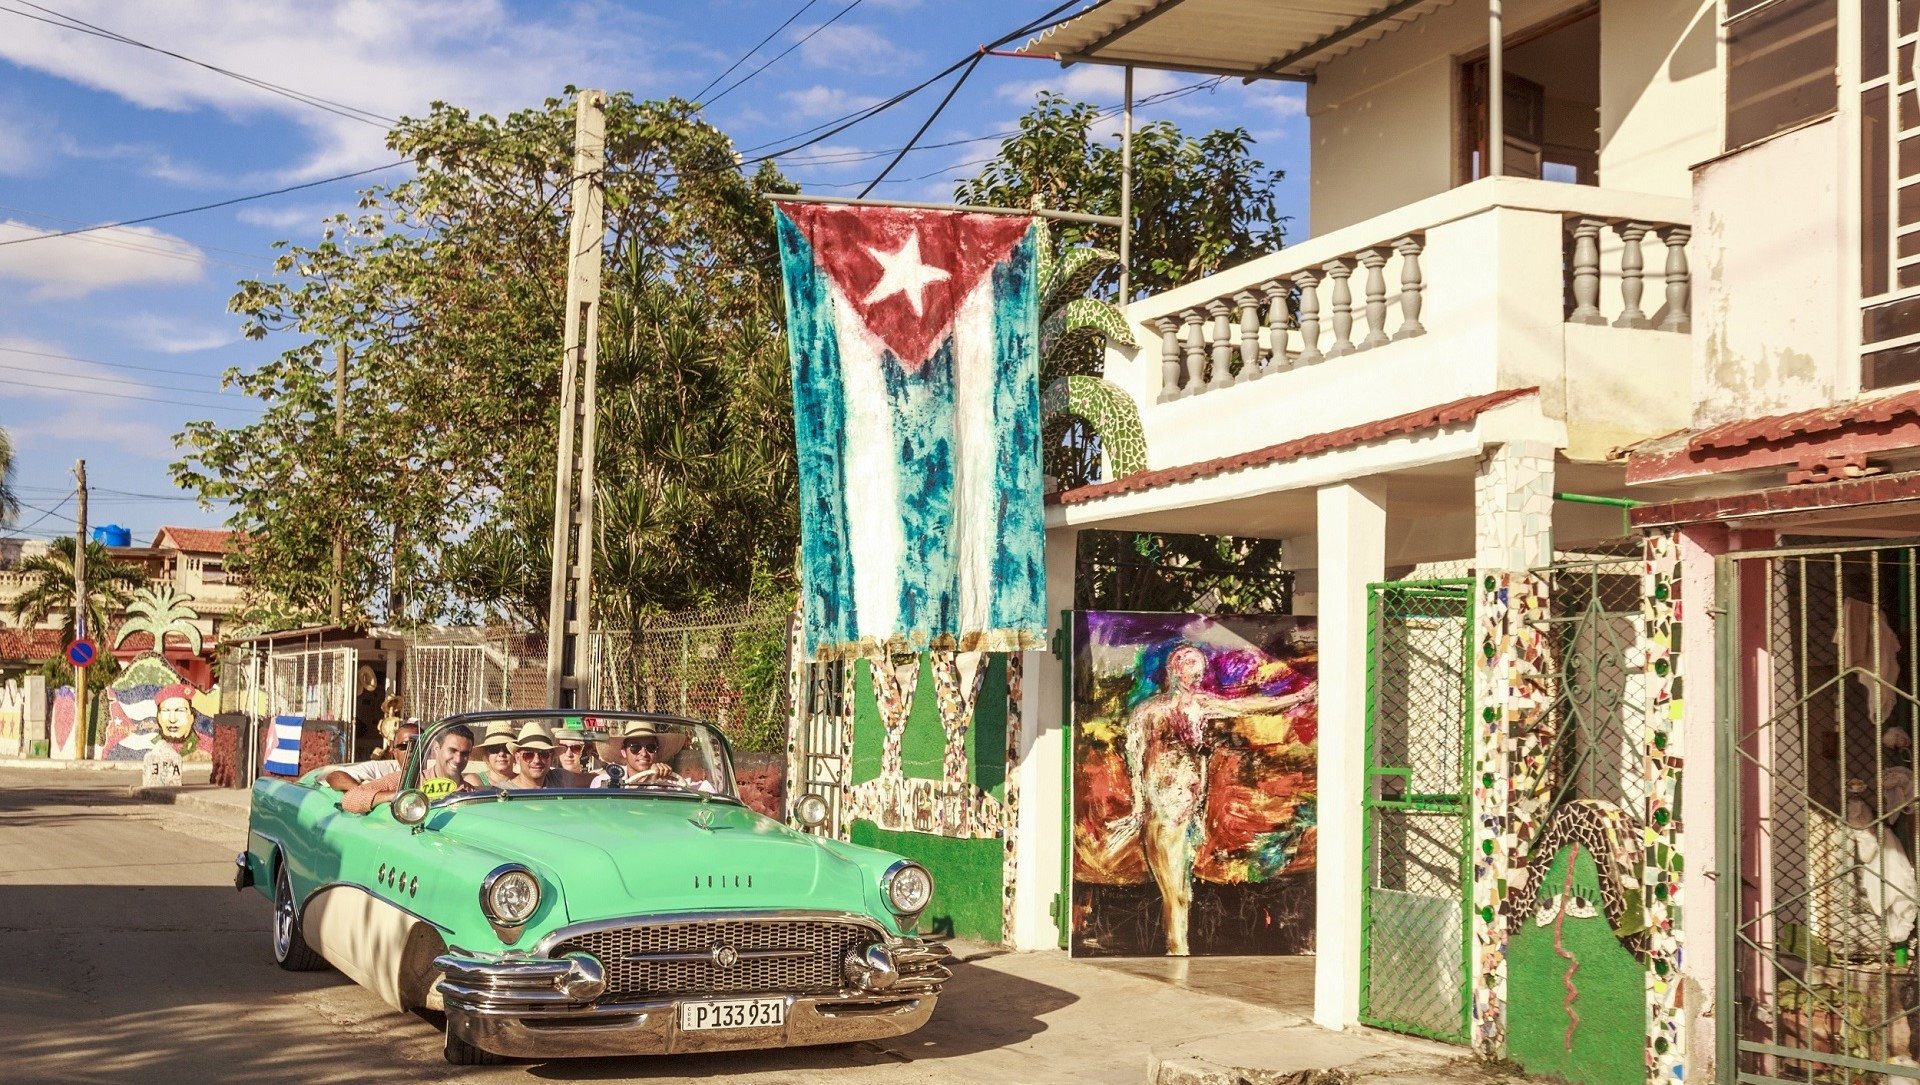 A Cuban Vintage Ride